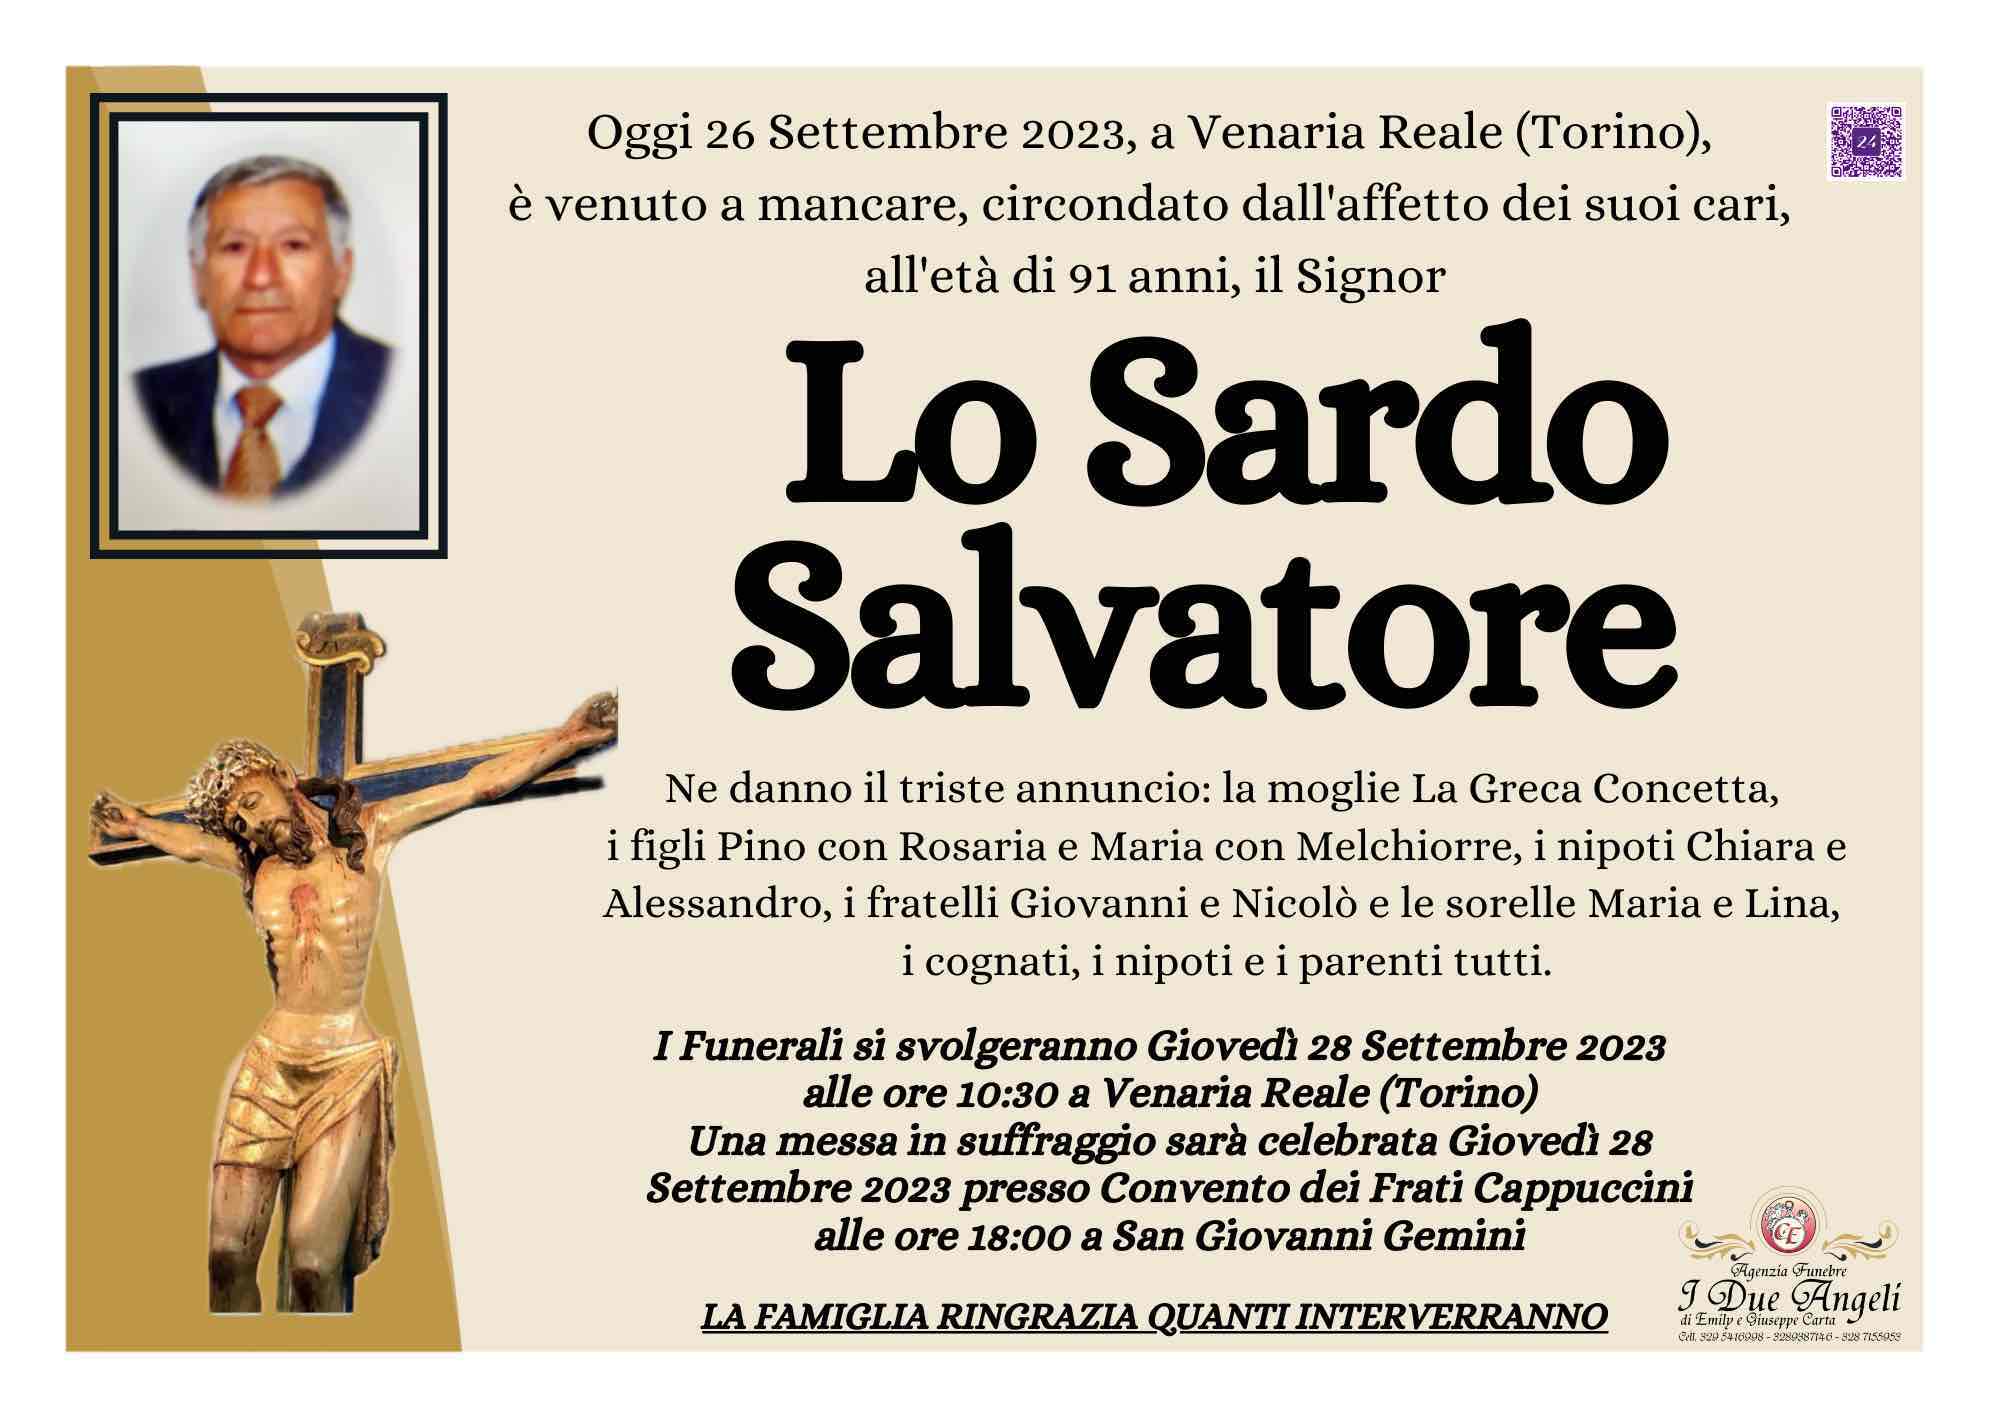 Salvatore Lo Sardo